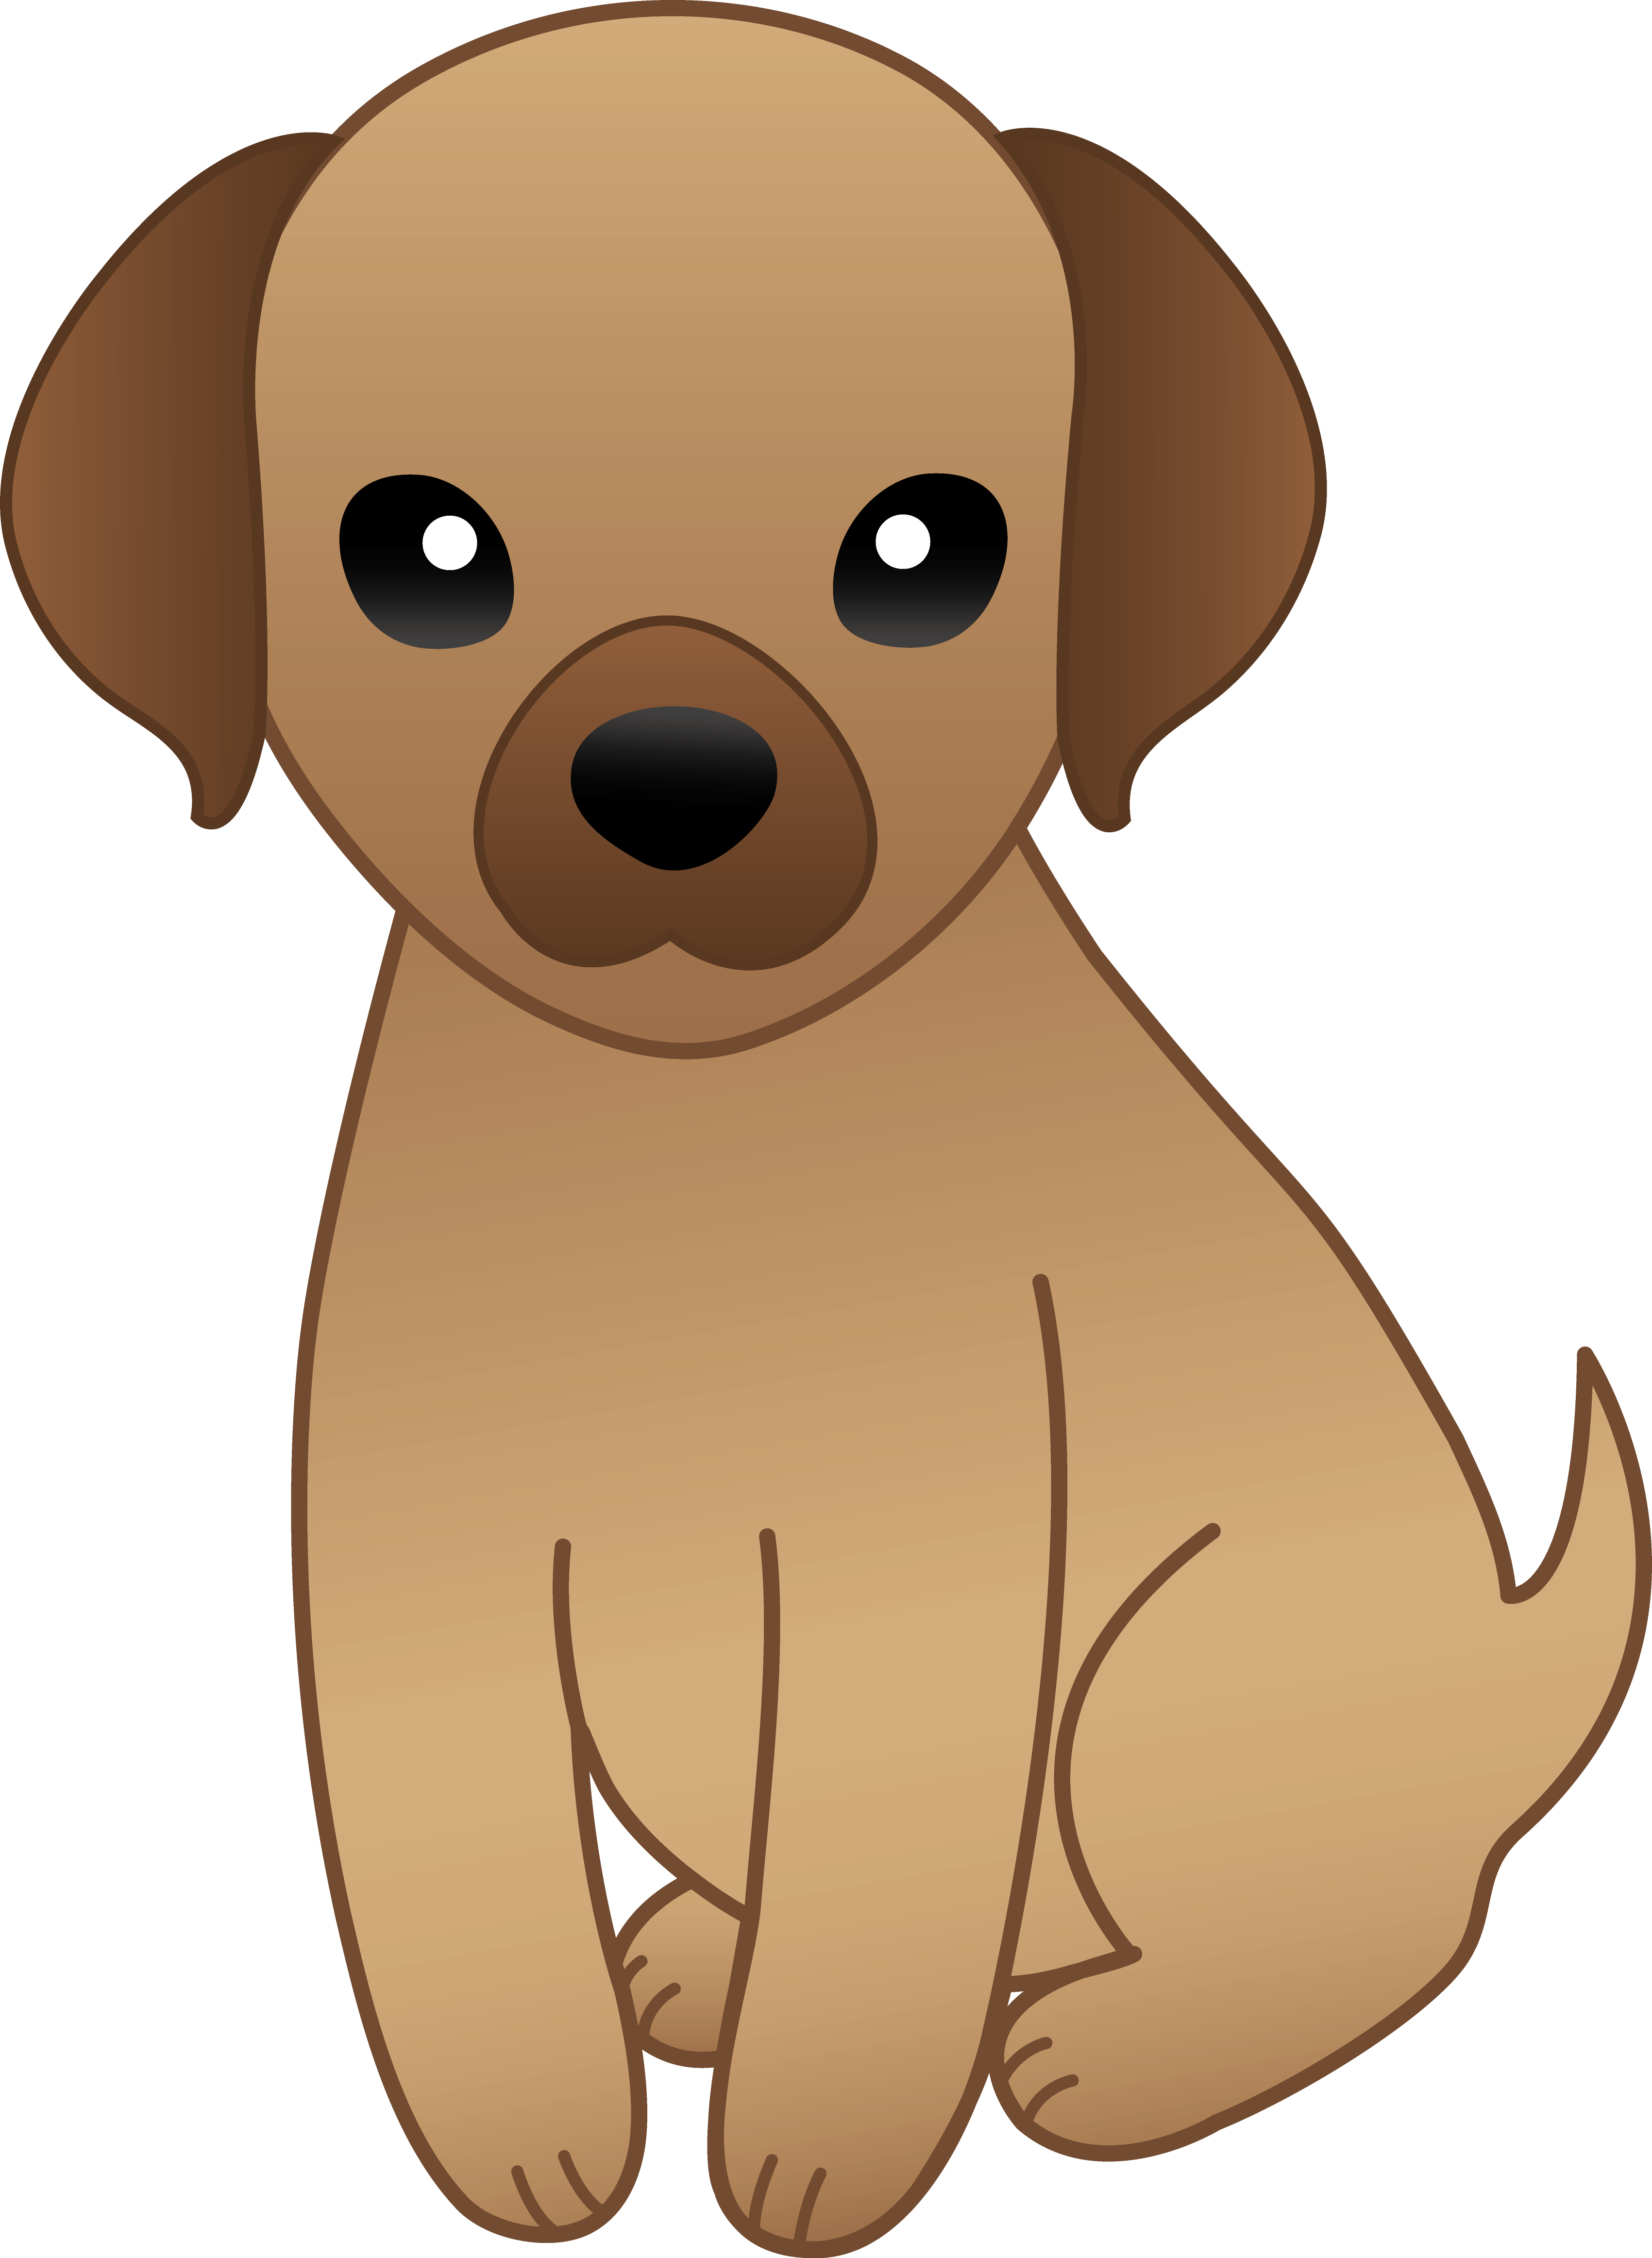 Free Pets Cartoon Cliparts, Download Free Pets Cartoon Cliparts png